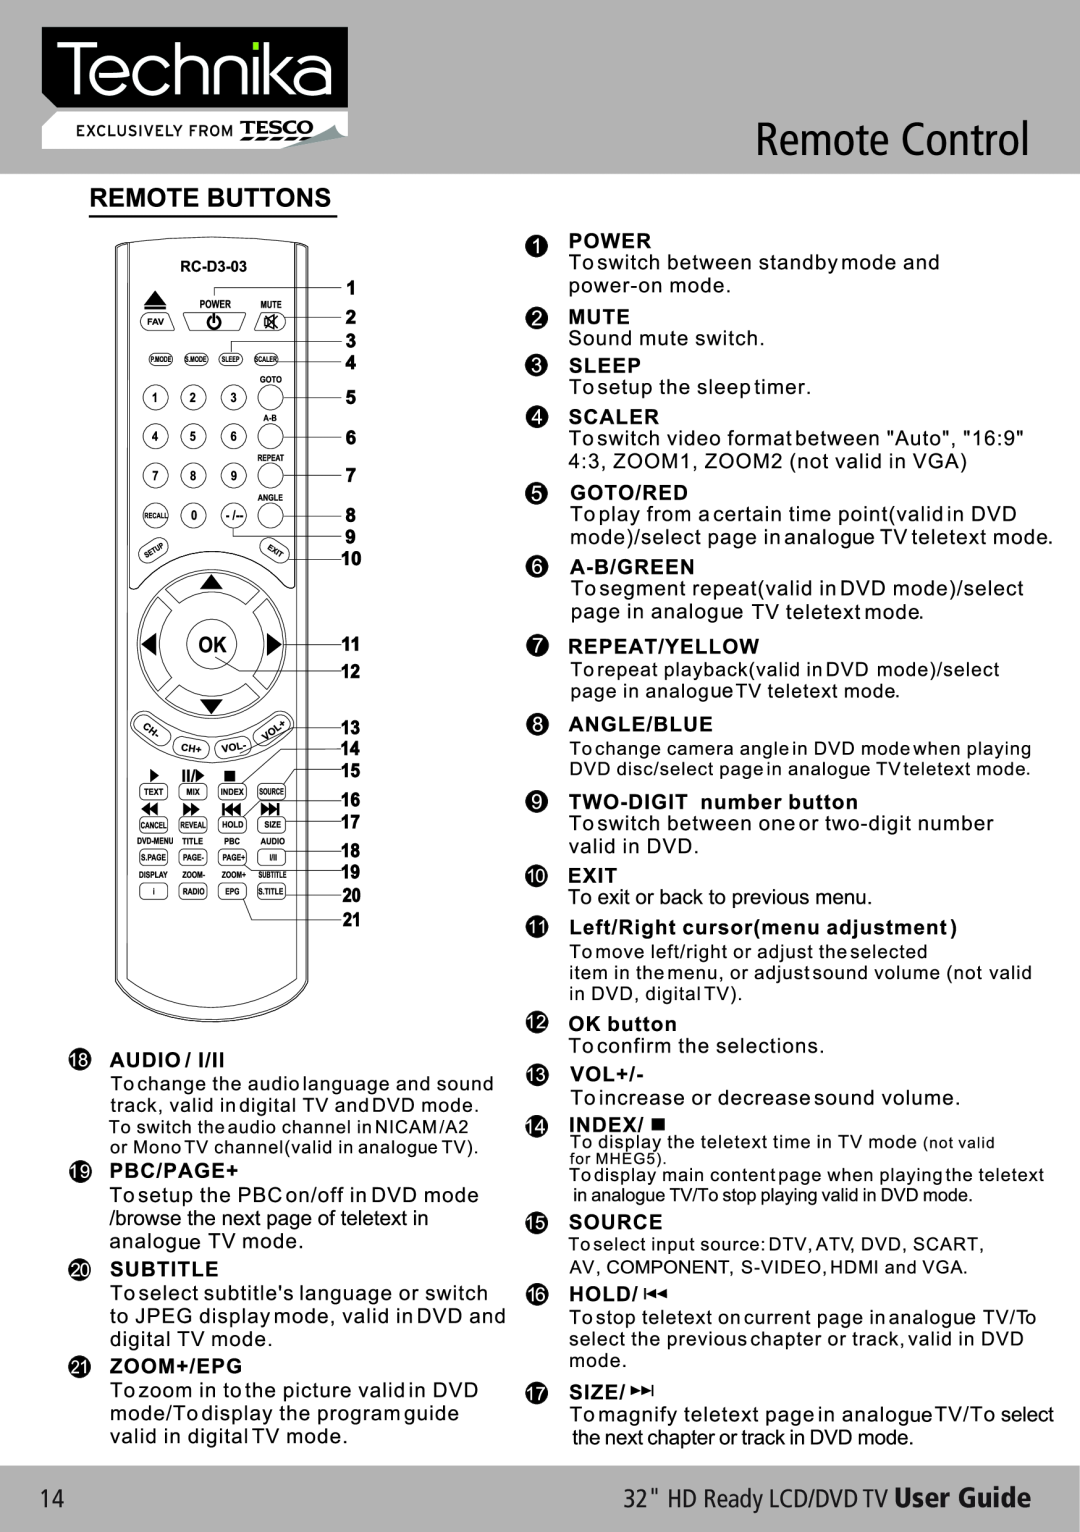 Technika 32-612 manual HD Ready LCD/DVD TV User Guide 